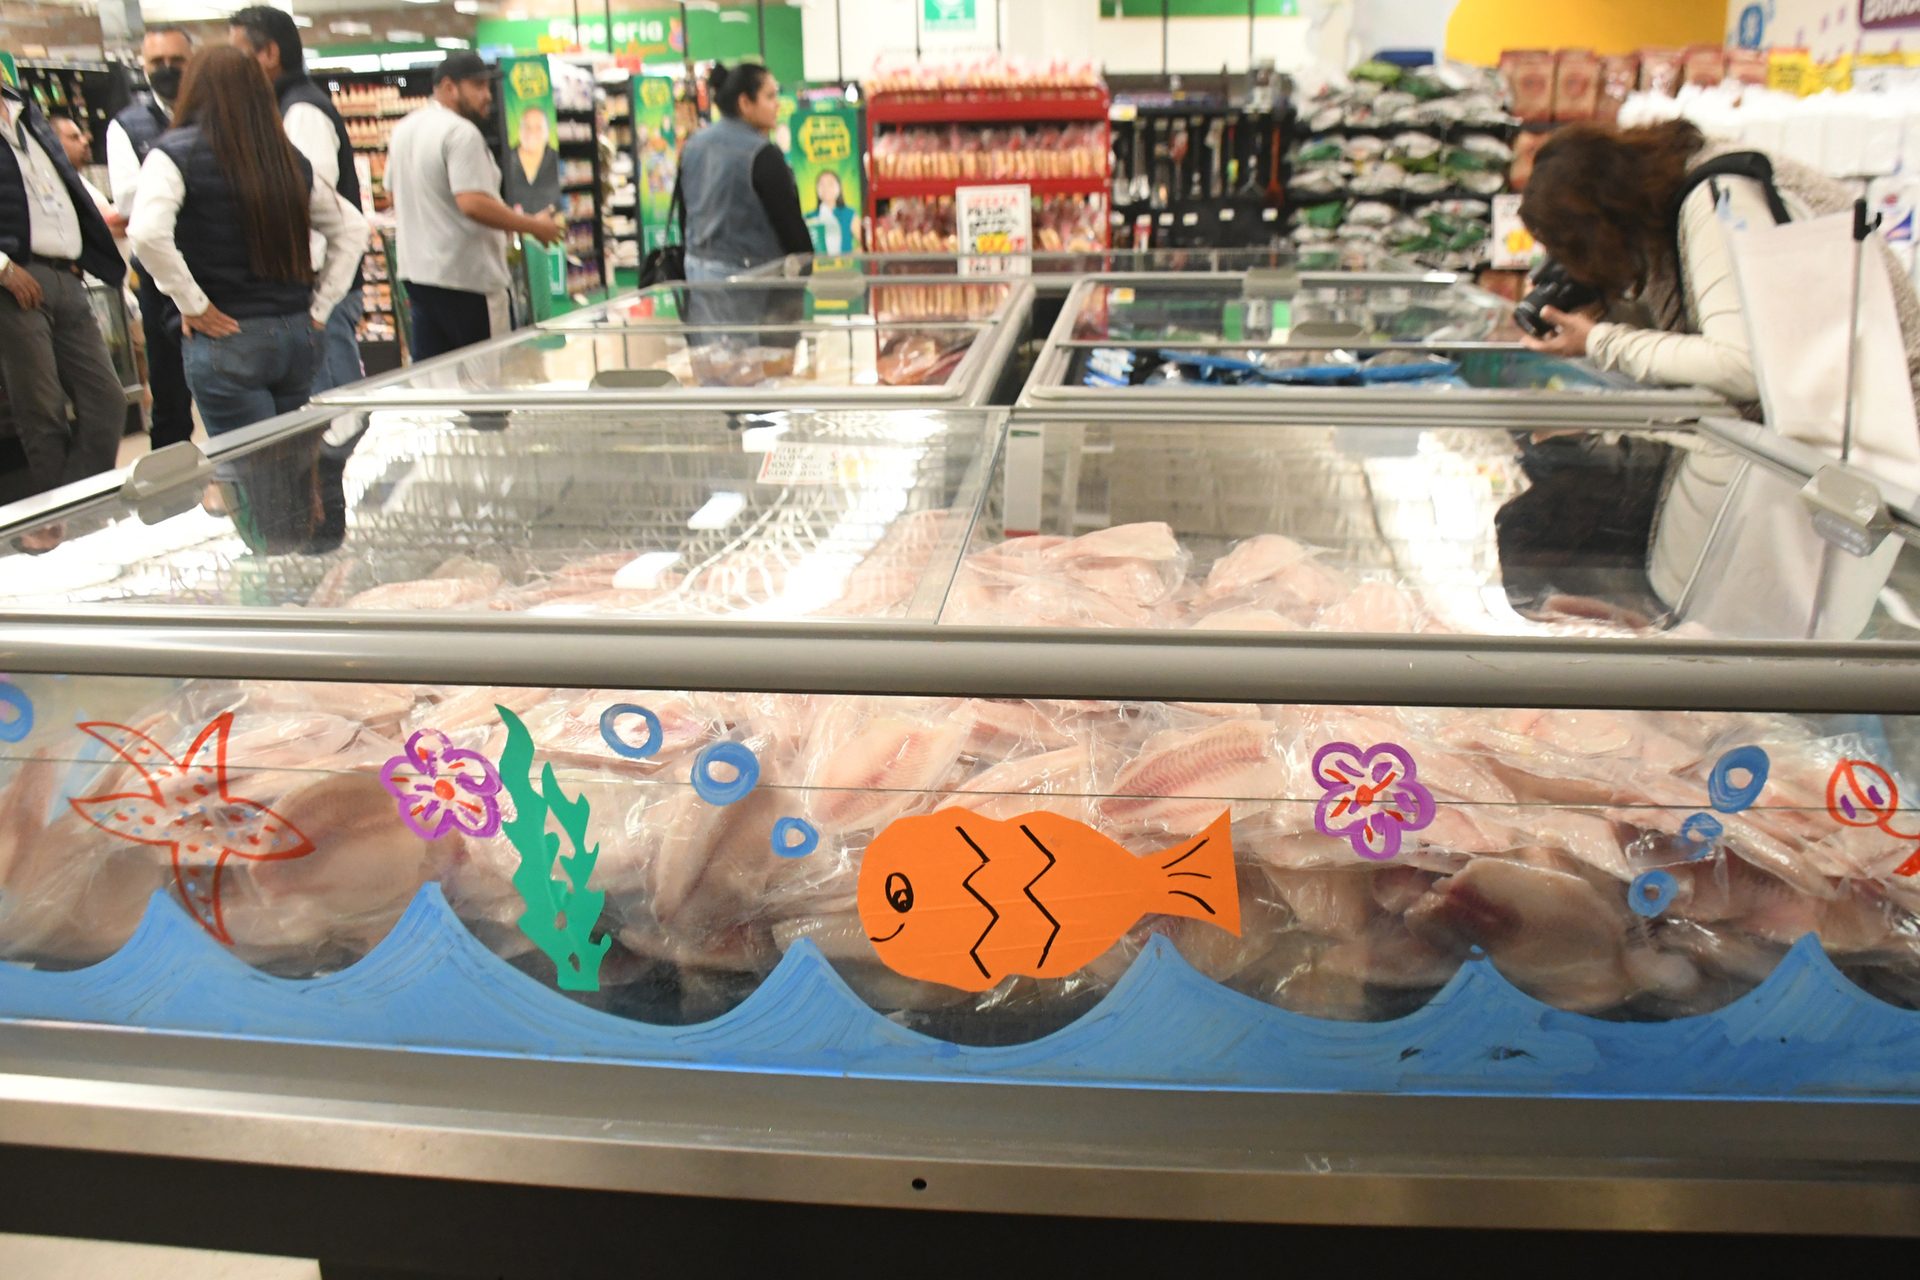 Pescados ofertados en un supermercado. (ARCHIVO)